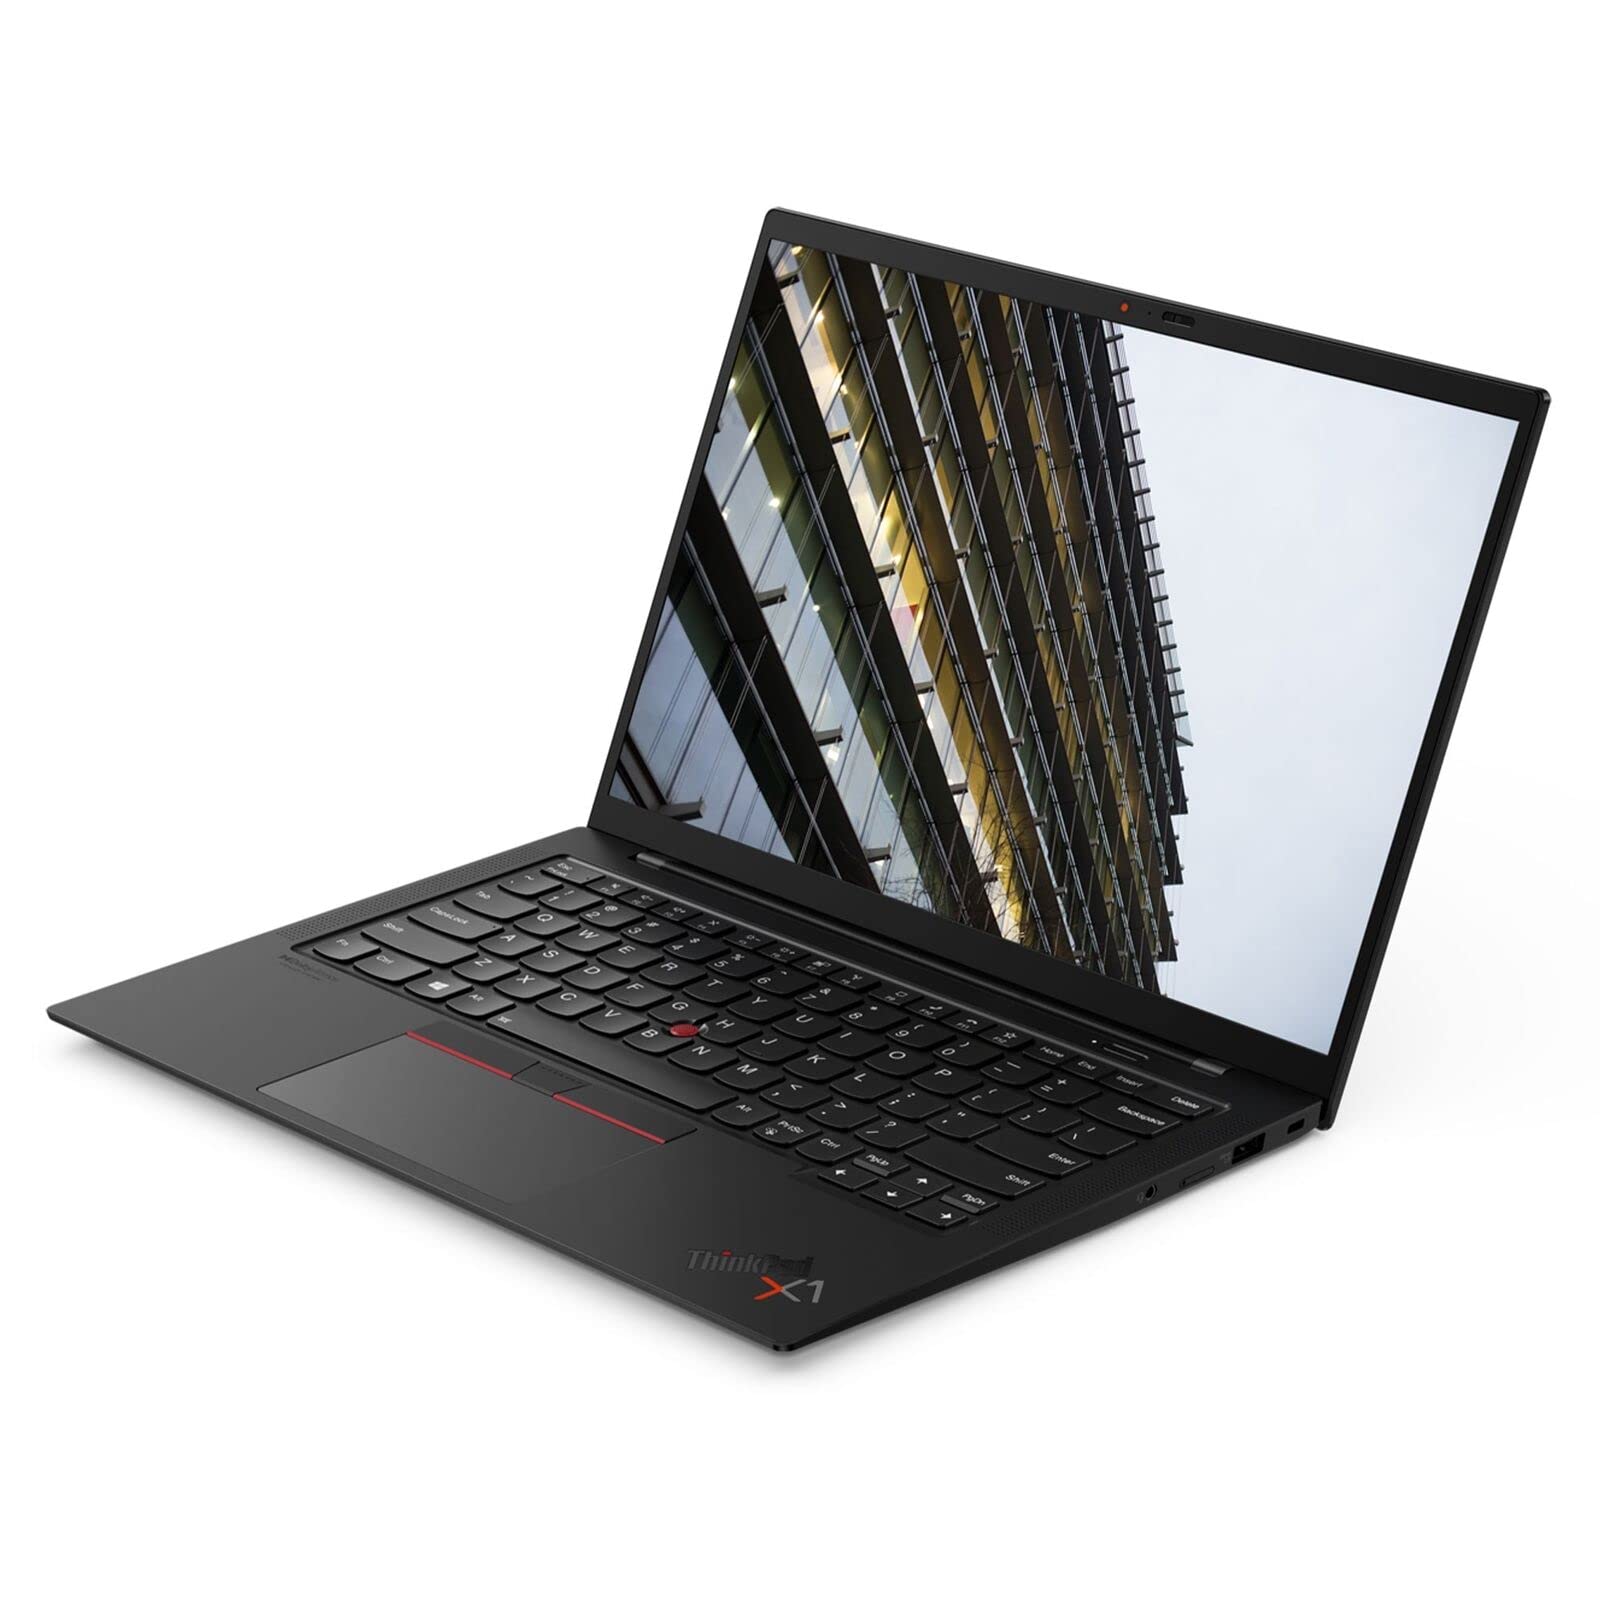 Lenovo ThinkPad X1 Carbon Gen 9 Business Laptop (14" FHD+, Intel i7-1185G7 vPro, 32GB RAM, 2TB PCIe SSD), Thunderbolt 4, Backlit, Fingerprint, 3-Year Warranty, Webcam, Wi-Fi 6, IST Cable, Win 11 Pro